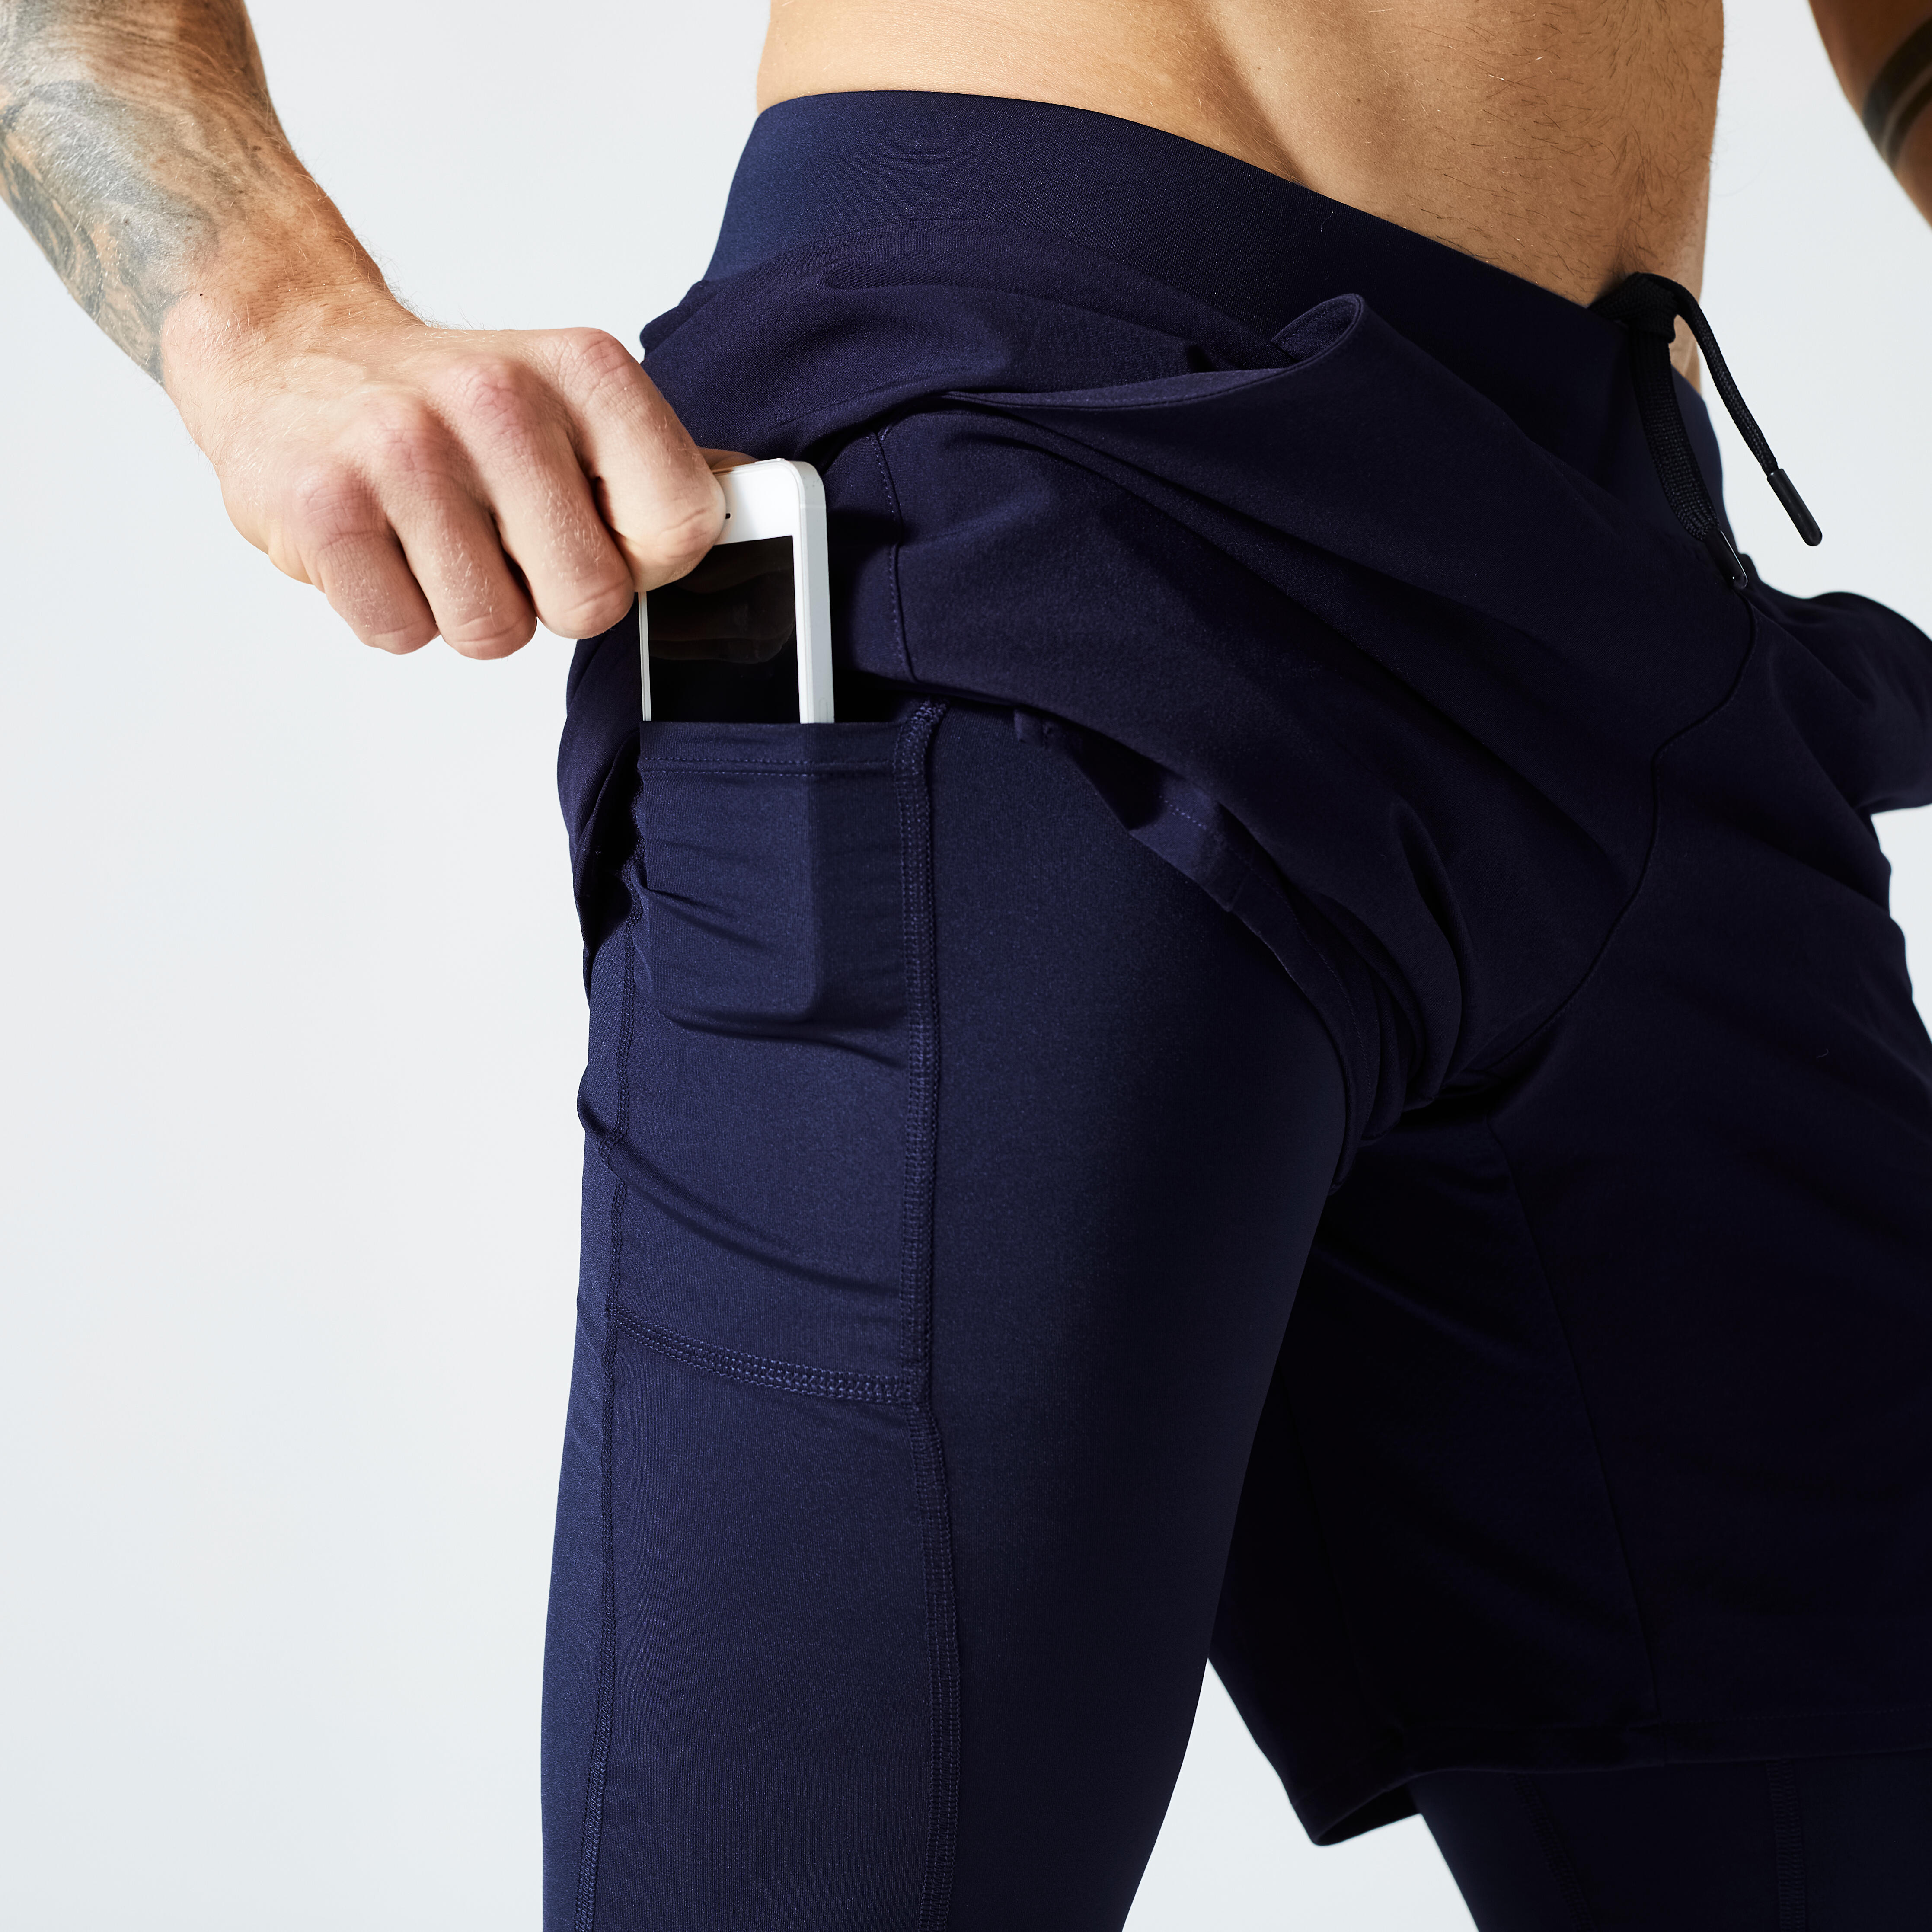 Breathable 2-in-1 Zip Pocket Fitness Shorts - Blue/Black - Decathlon